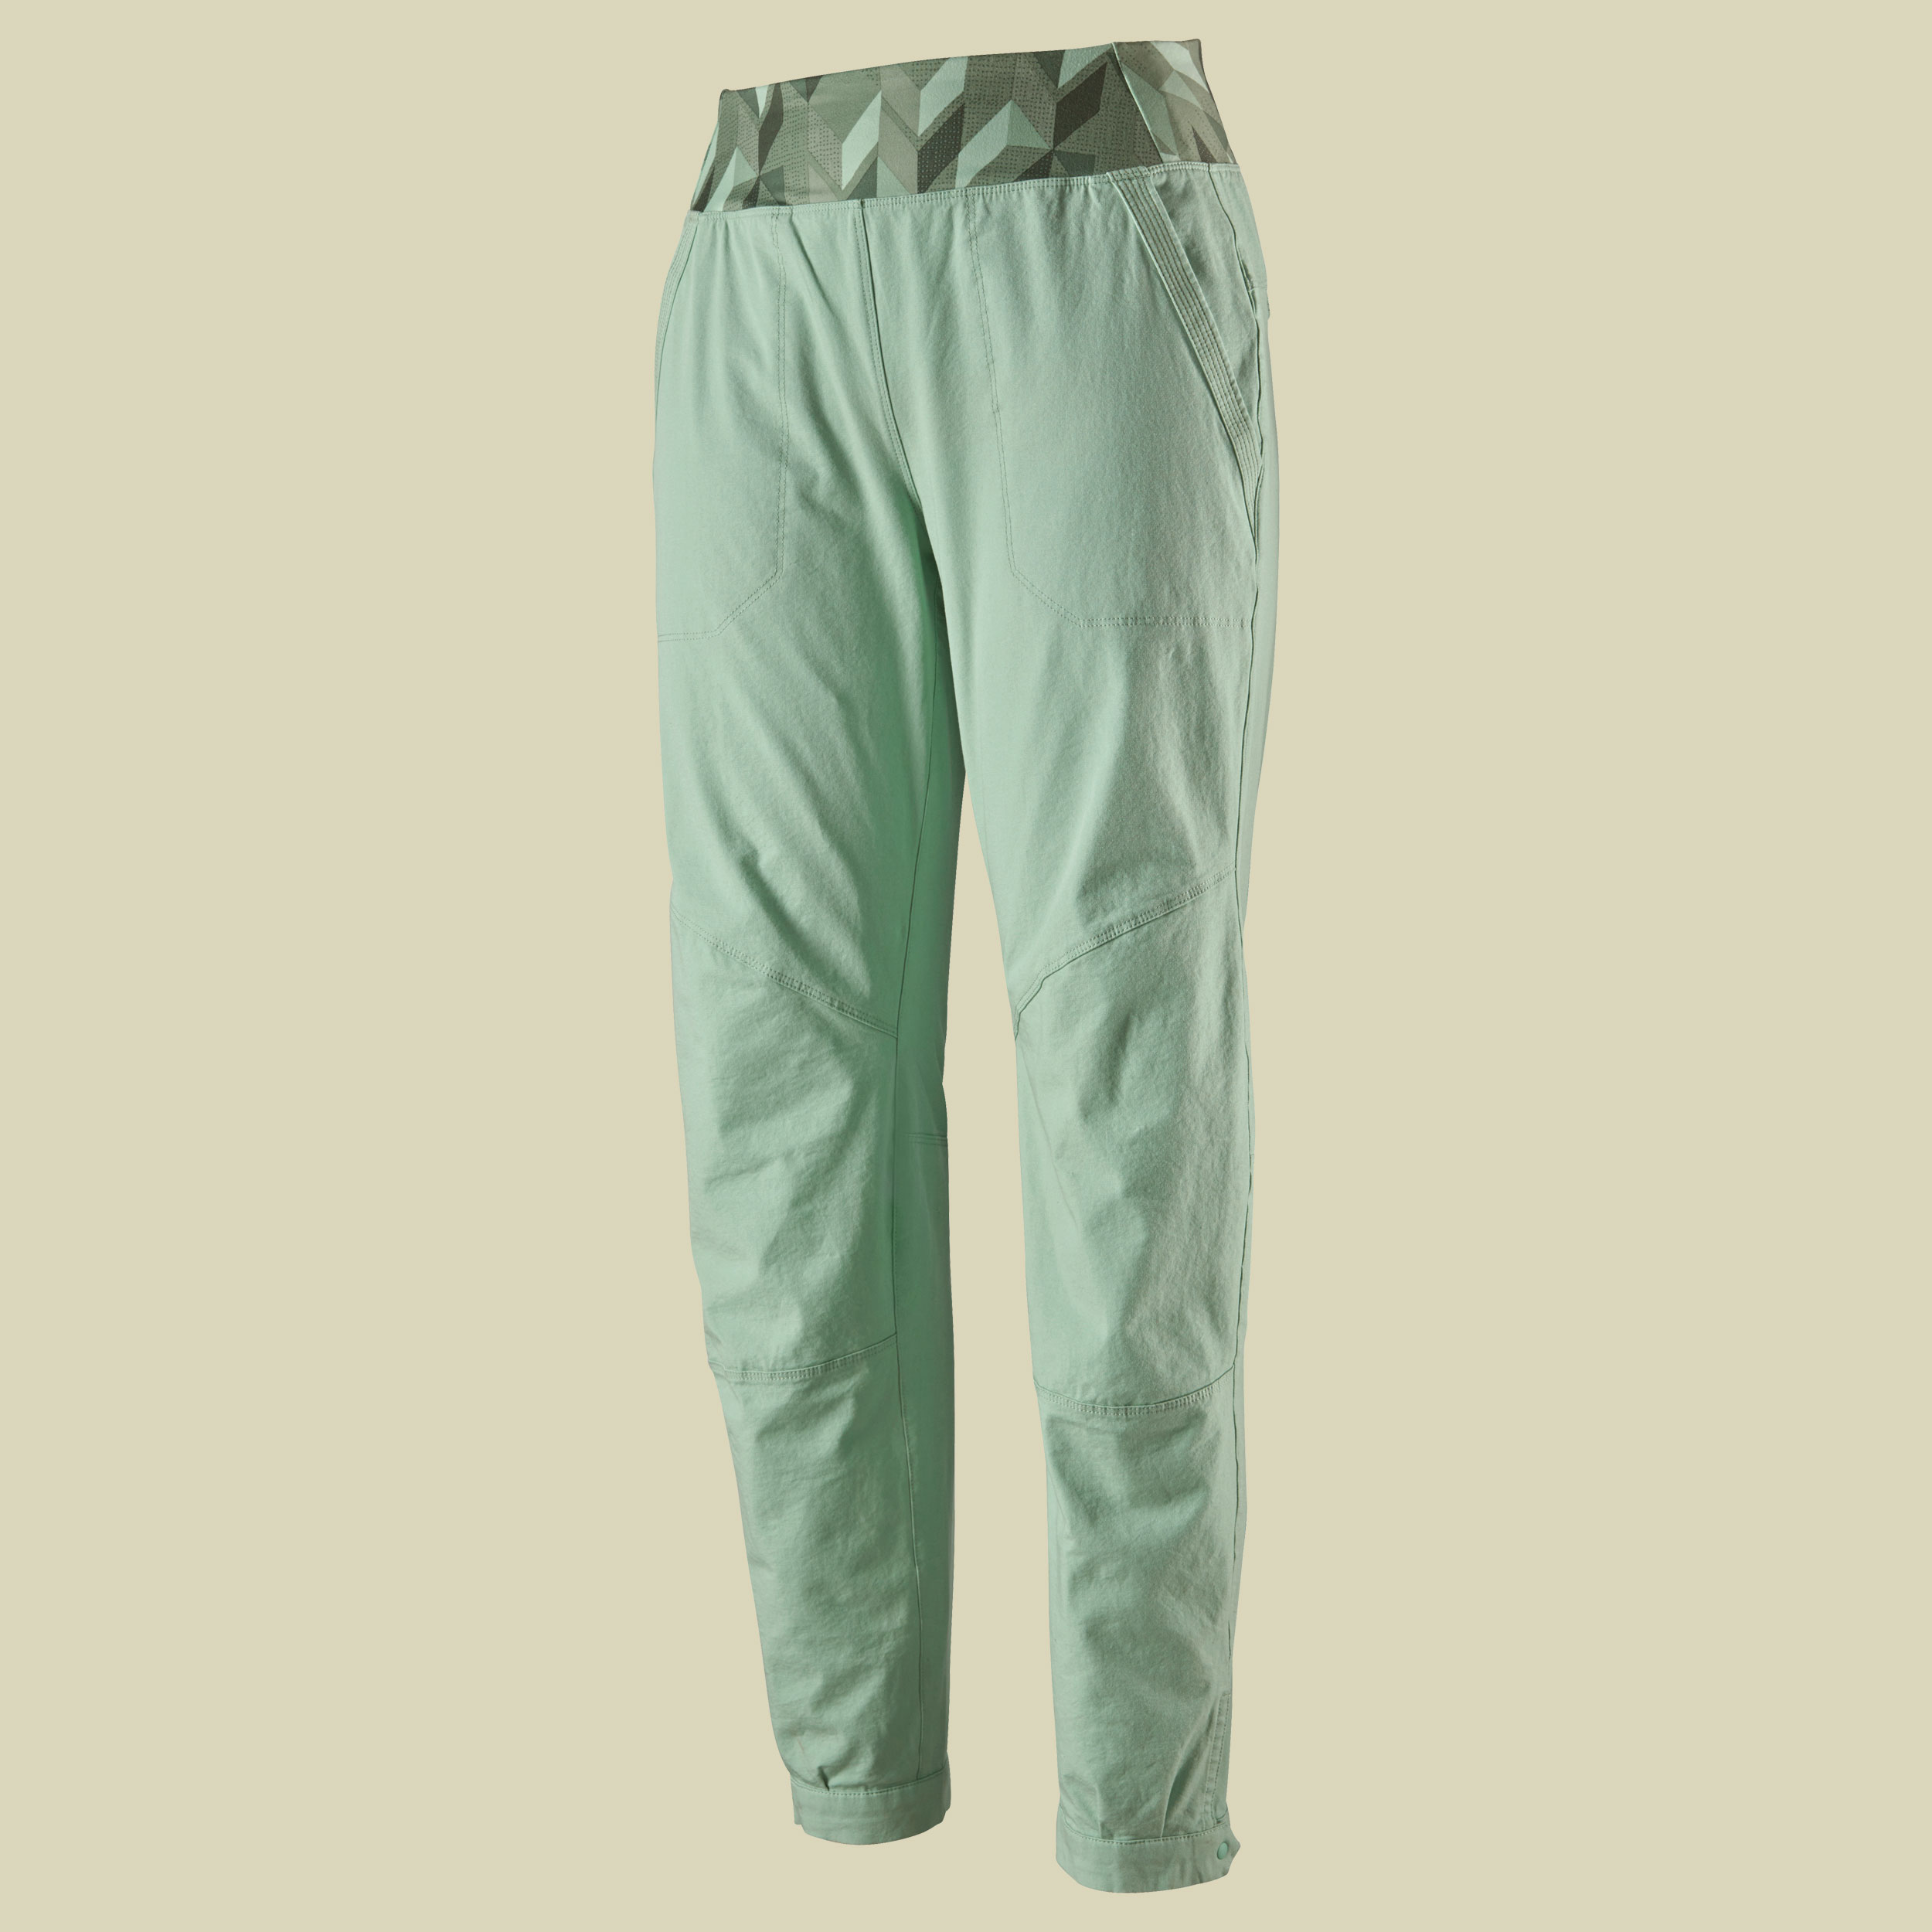 Caliza Rock Pants Women Größe 6 Farbe gypsum green